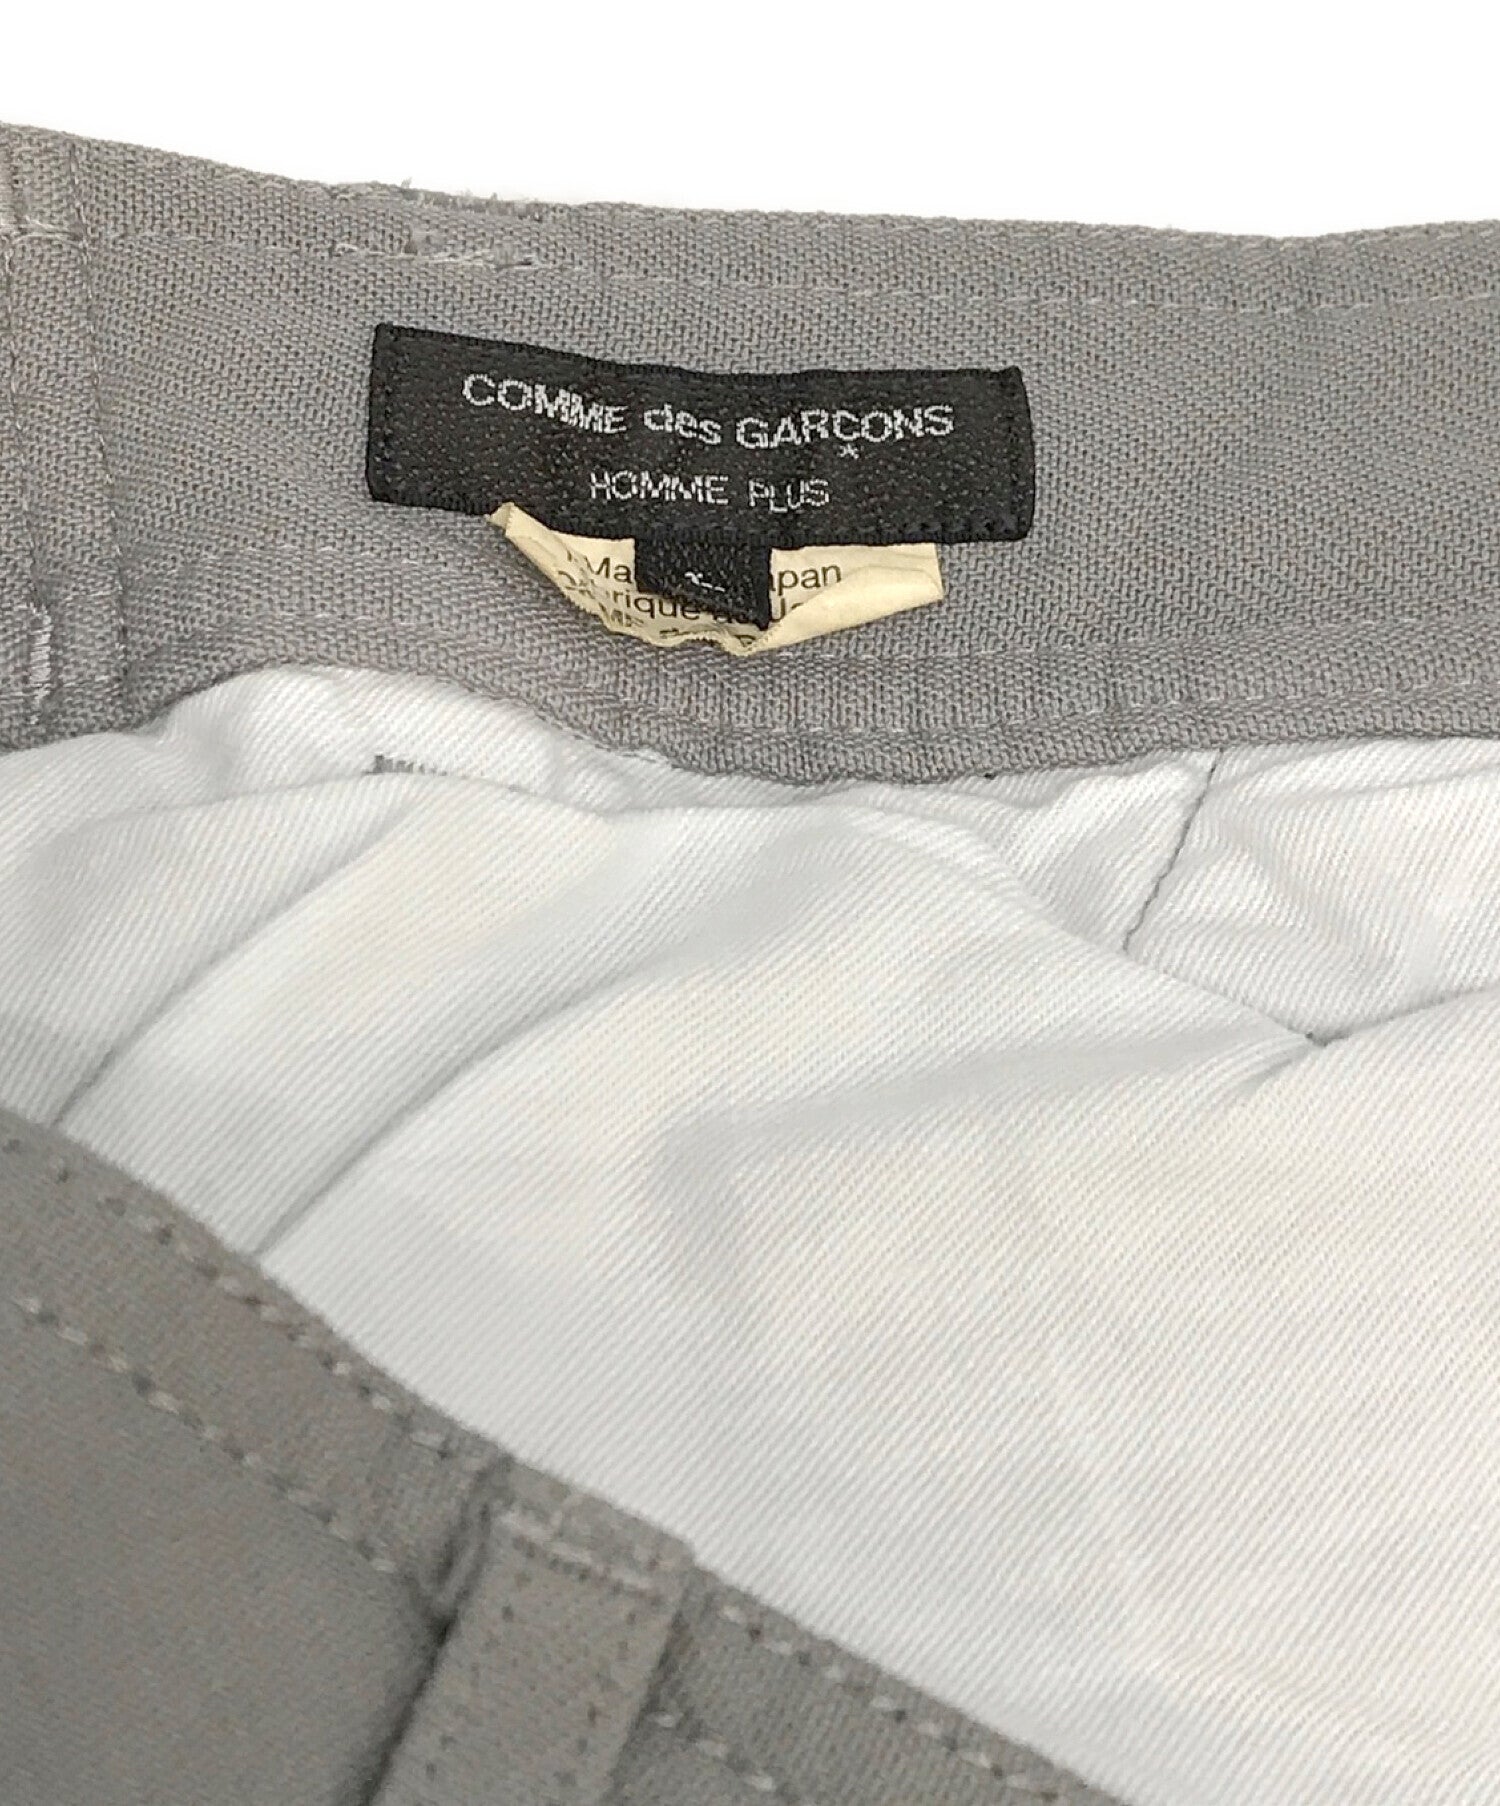 COMME des GARCONS HOMME PLUS Poly-cushioned Easy Pants PG-P058